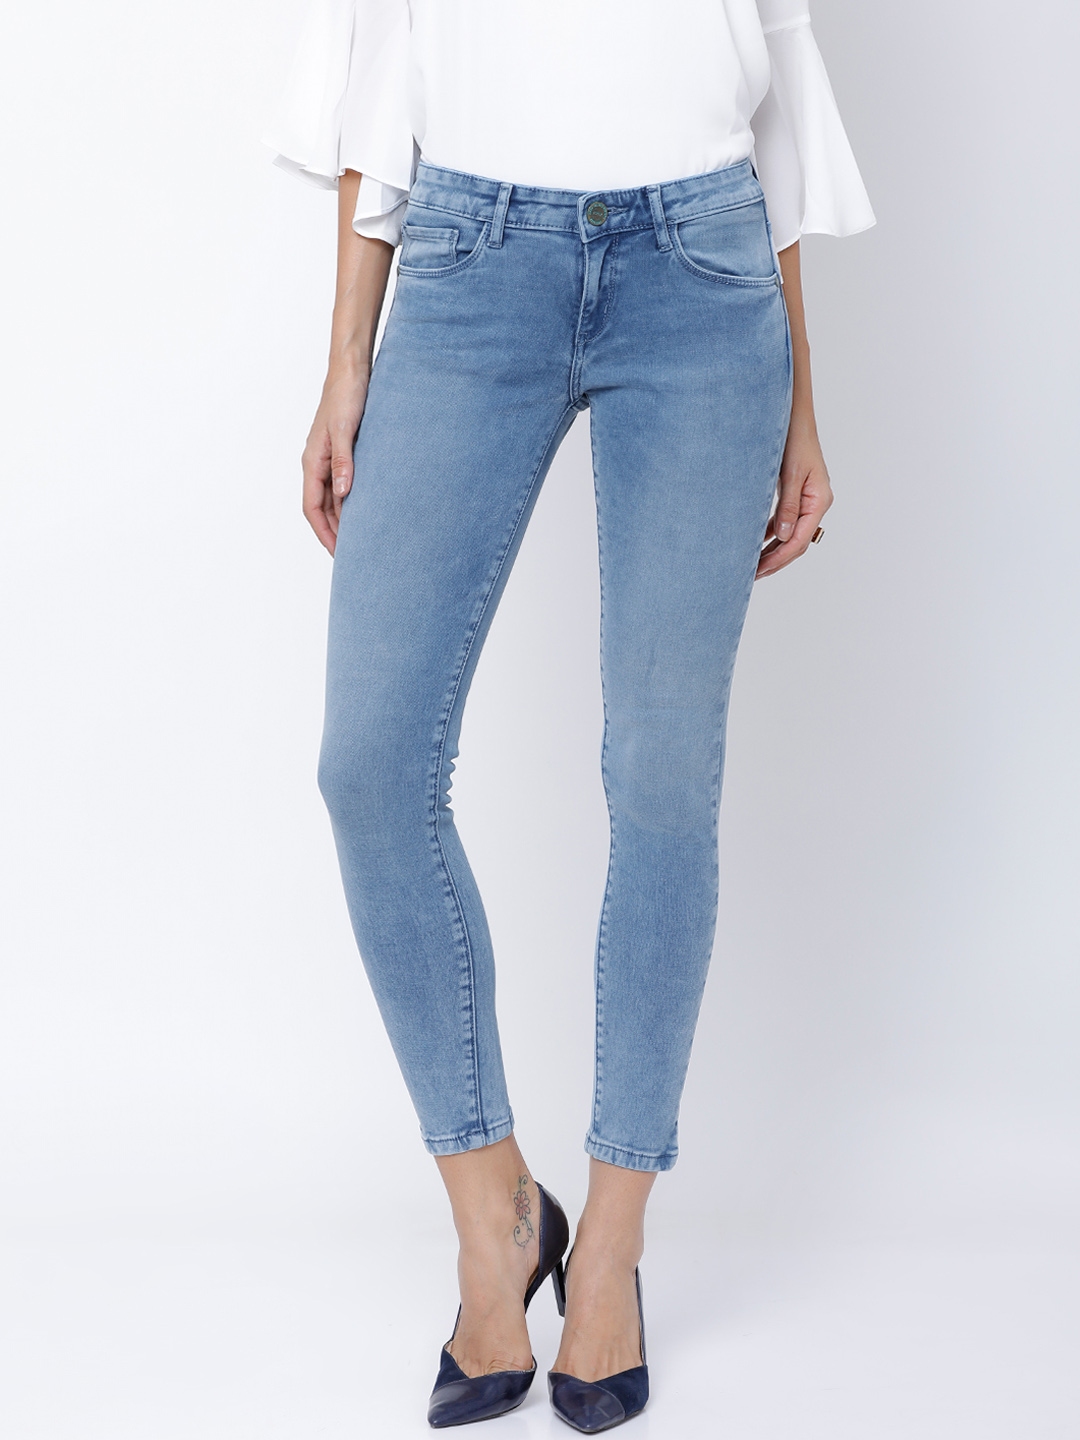 myntra ladies jeans